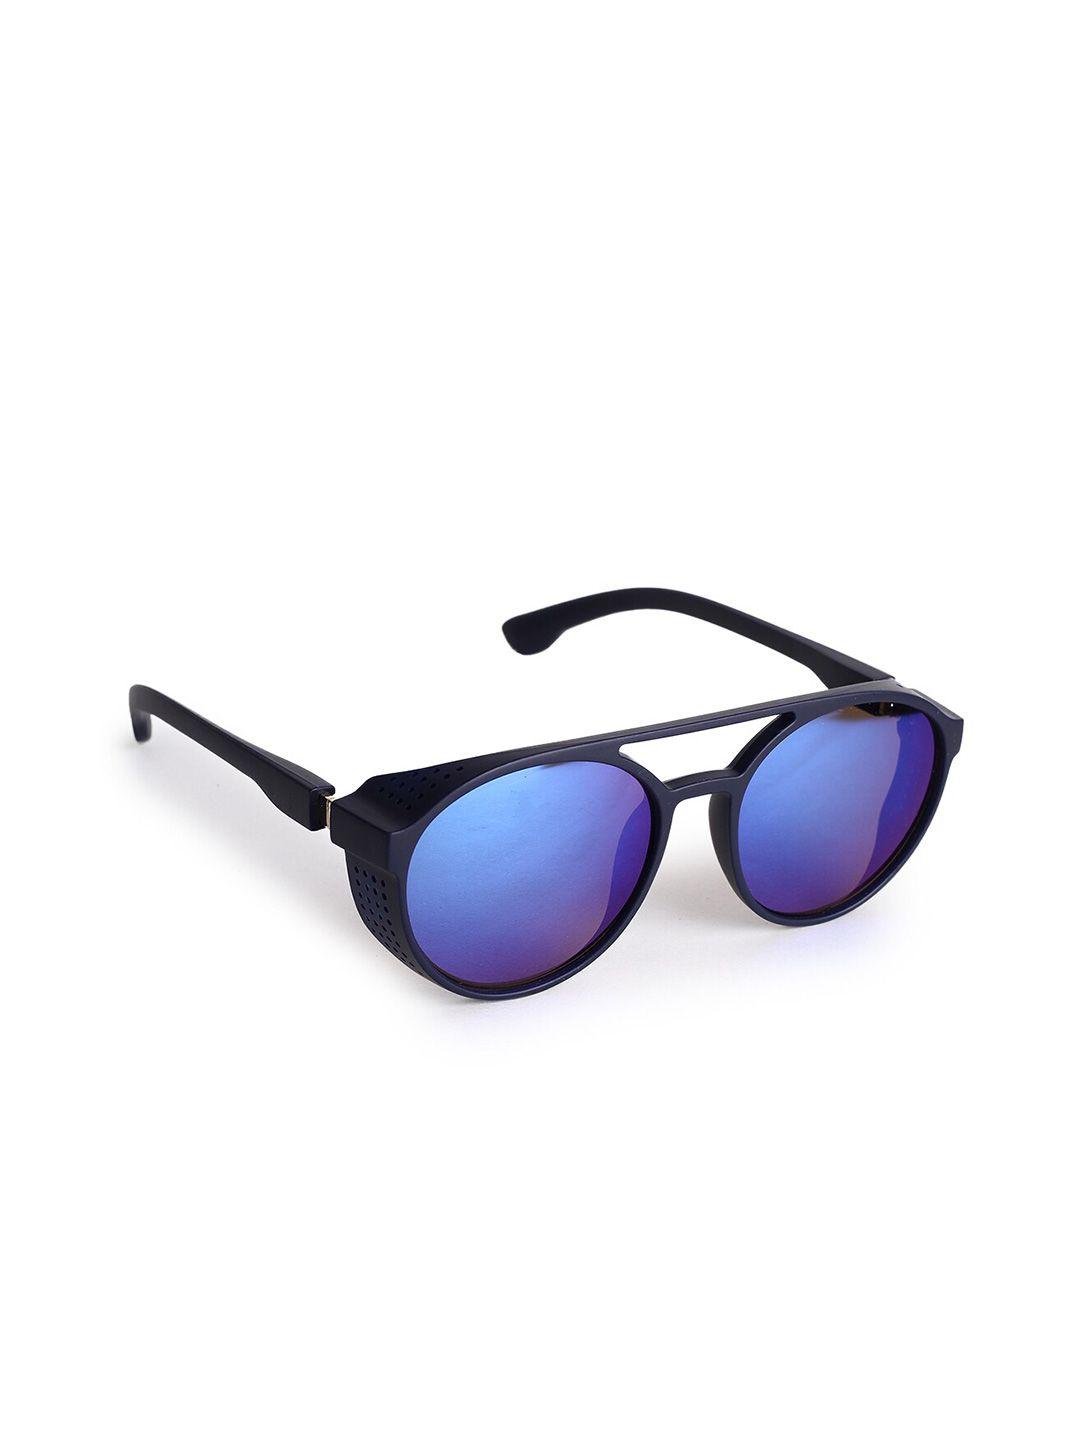 hashburys unisex blue lens & black round sunglasses with uv protected lens